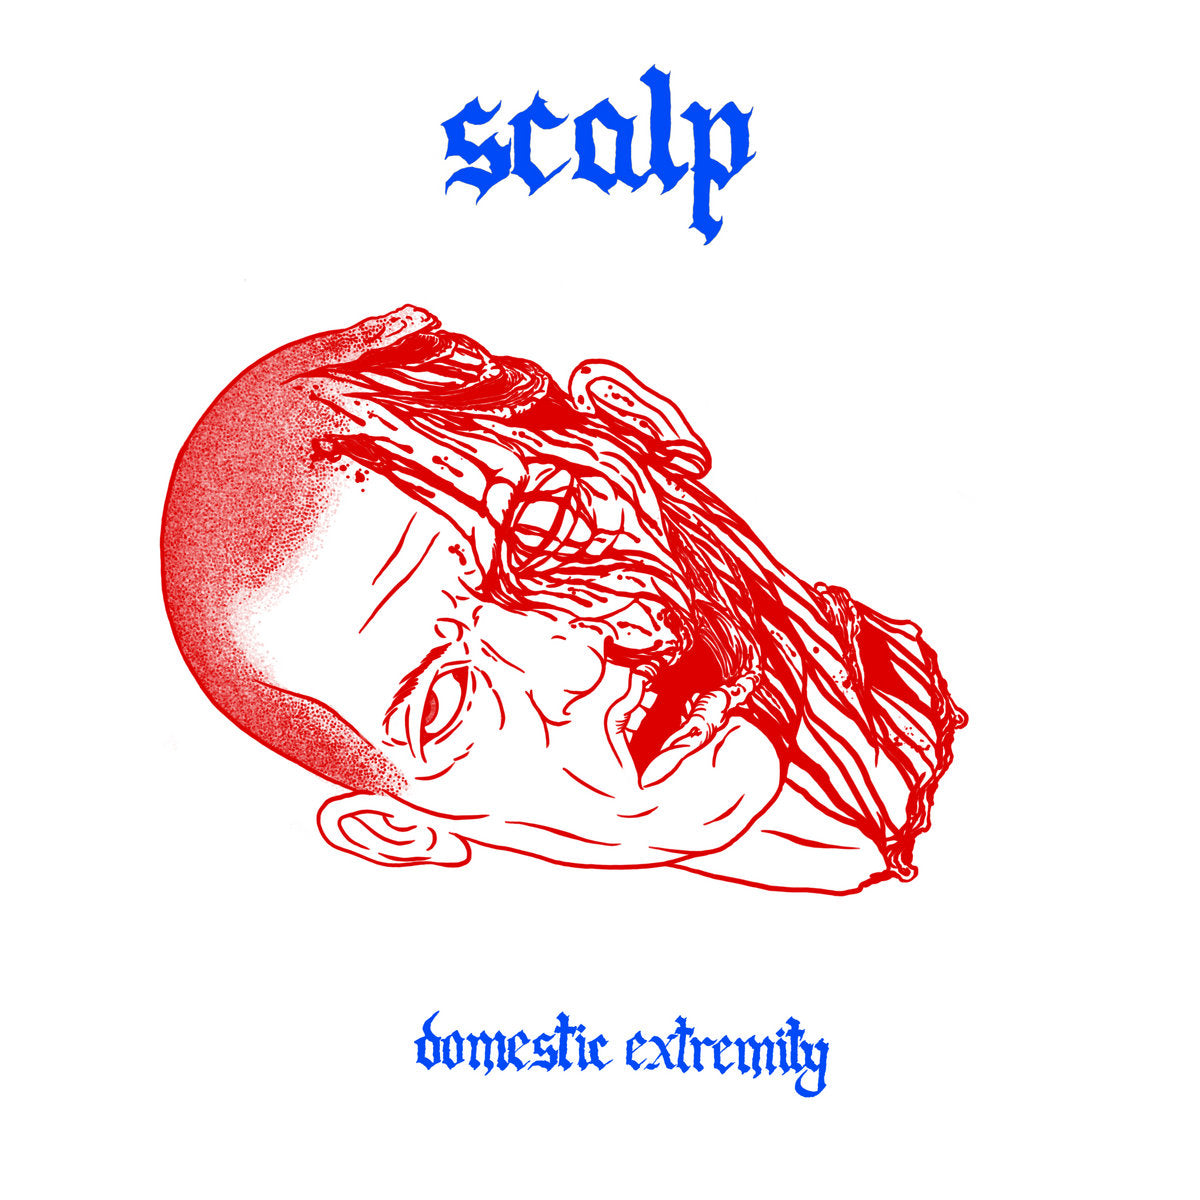 Scalp  "Domestic Extremity" LP